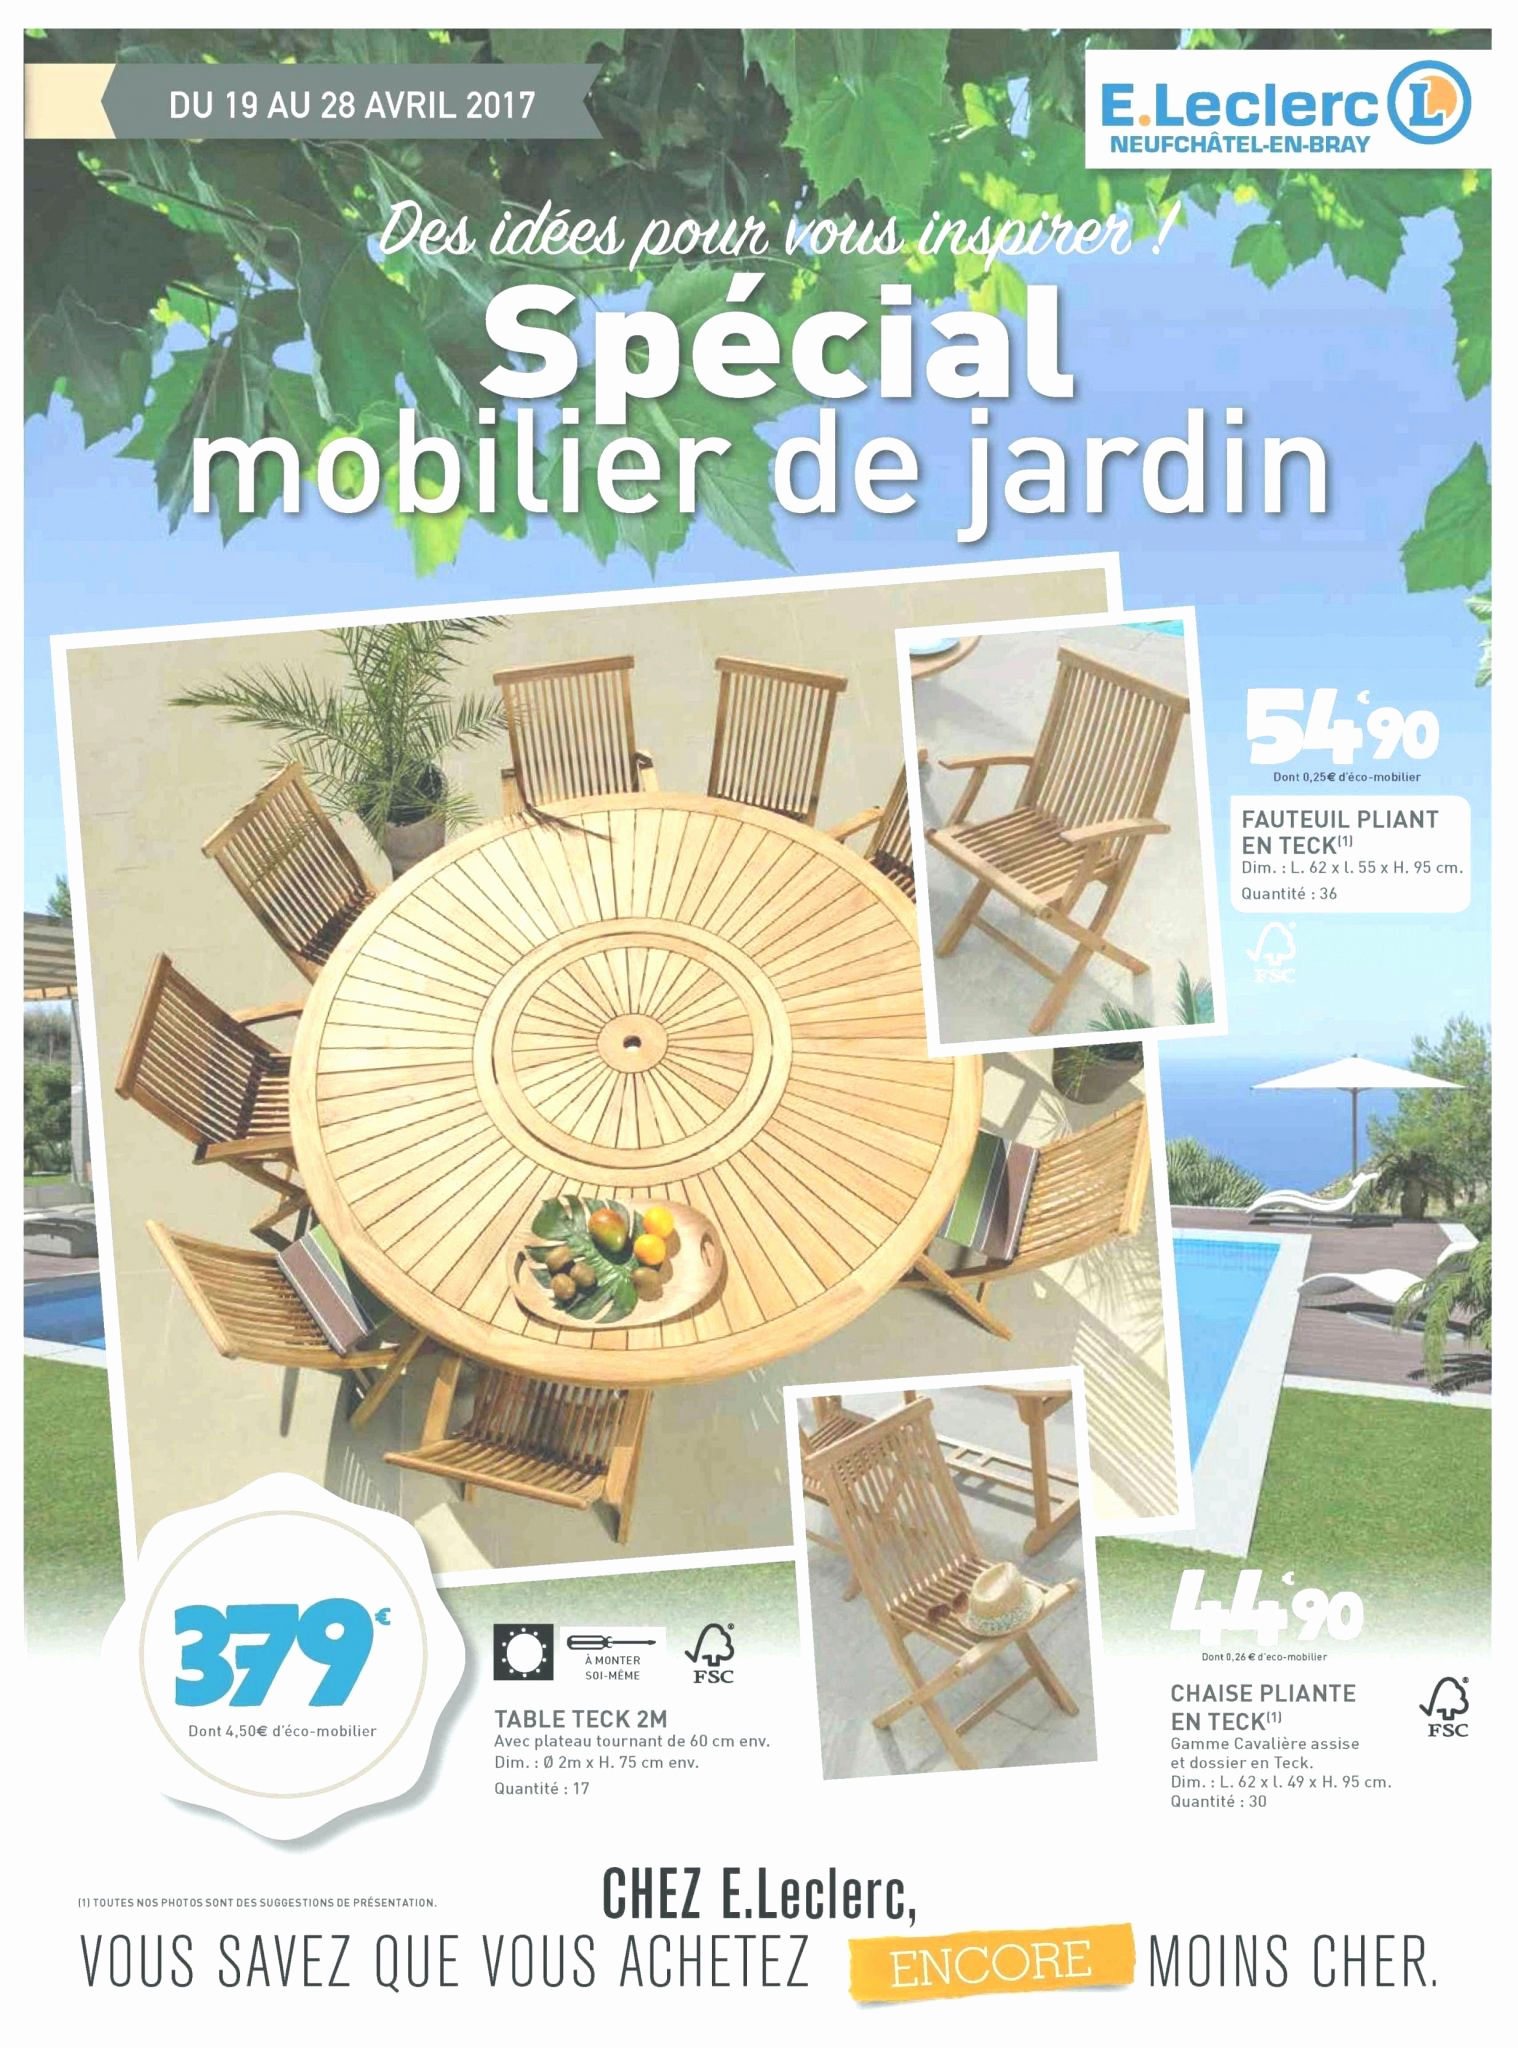 Table De Salon De Jardin Leclerc Frais Salon De Jardin Leclerc Catalogue 2017 Le Meilleur De Table